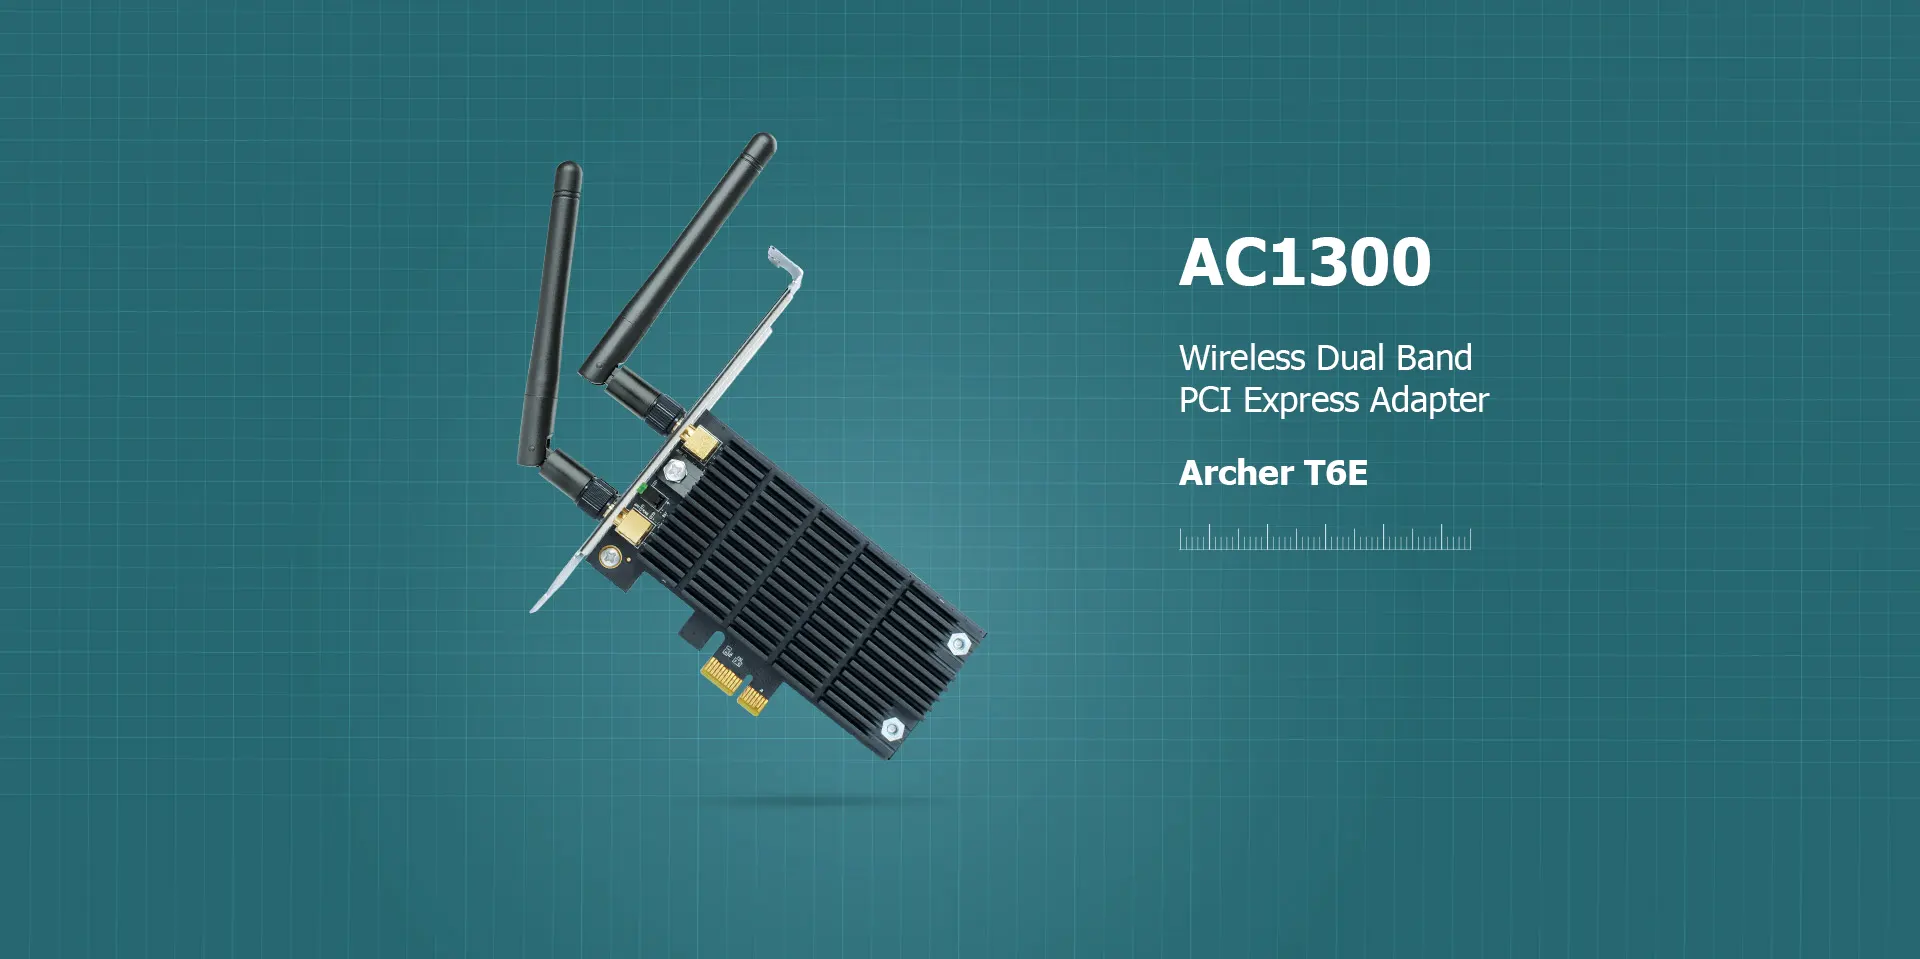 دانگل وای فای تی پی لینک مدل TP-Link Archer T6E AC1300 Wireless Dual Band PCI Express Adapter